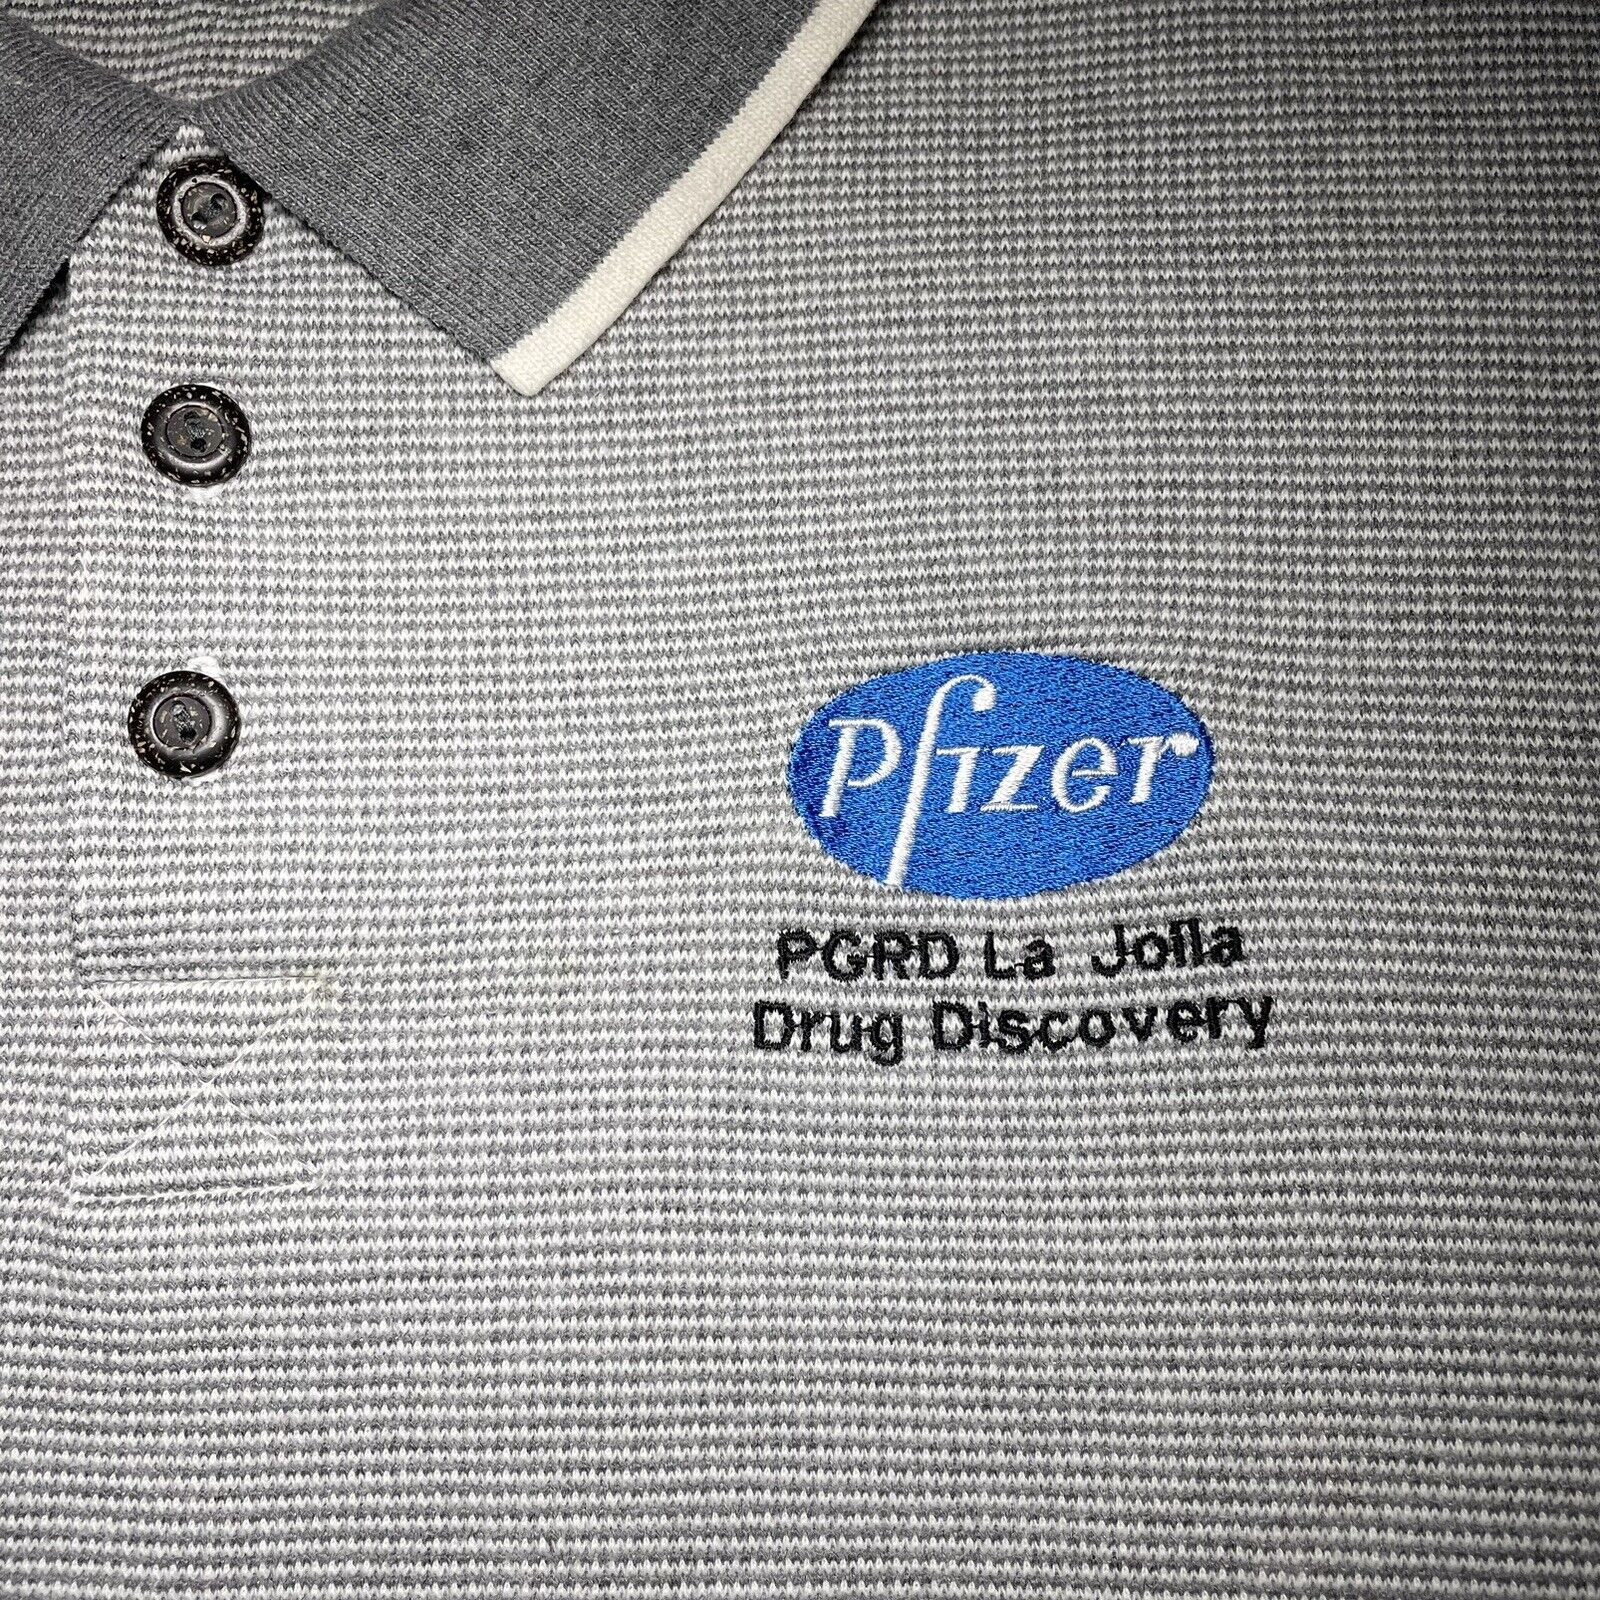 Vintage Pfizer La Jolla Drug Research Sweatshirt L/XL